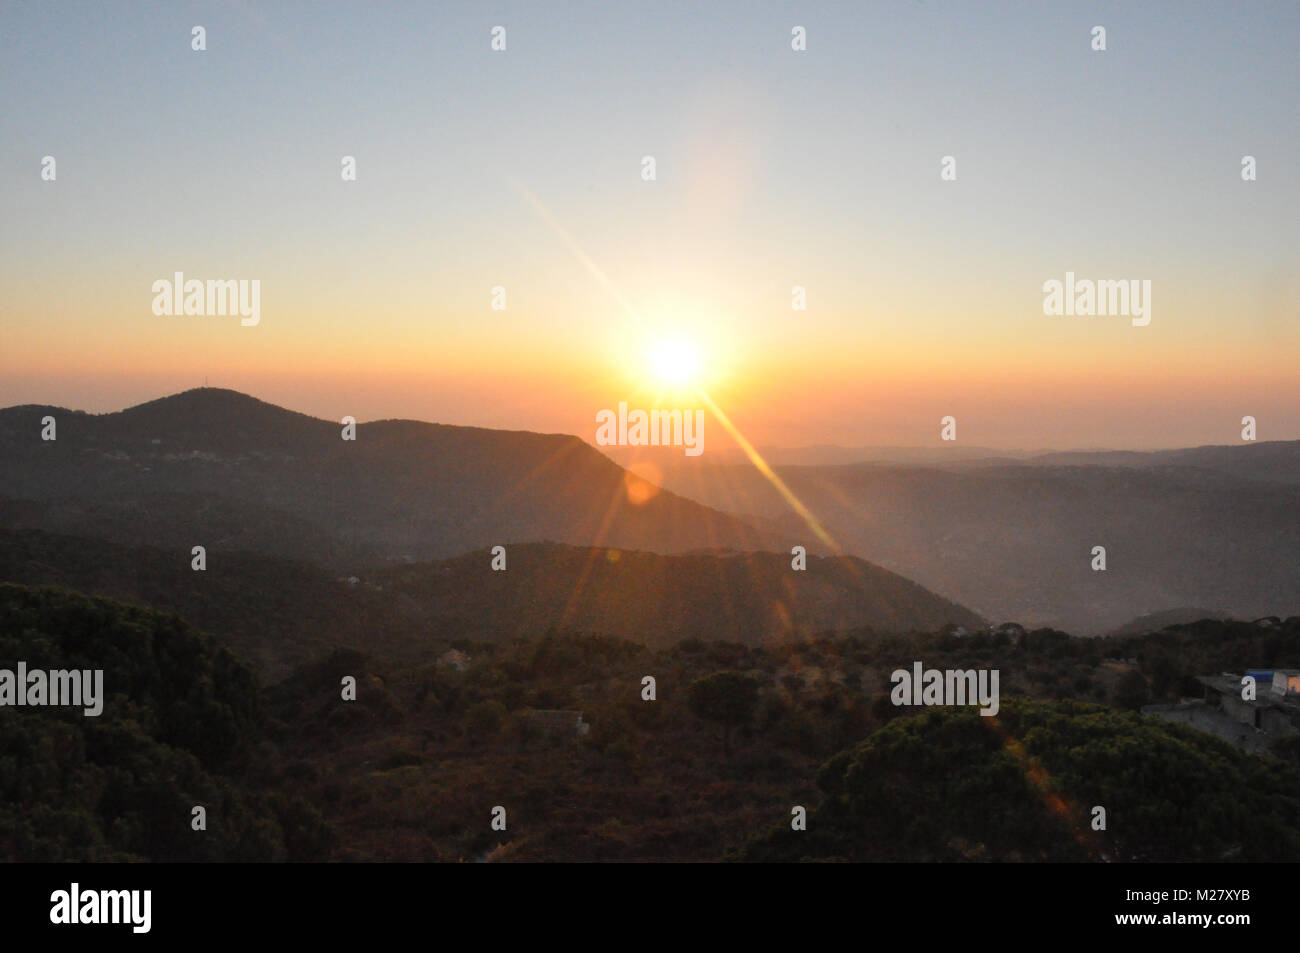 Sunset on a Mountain Landscape Stock Photo